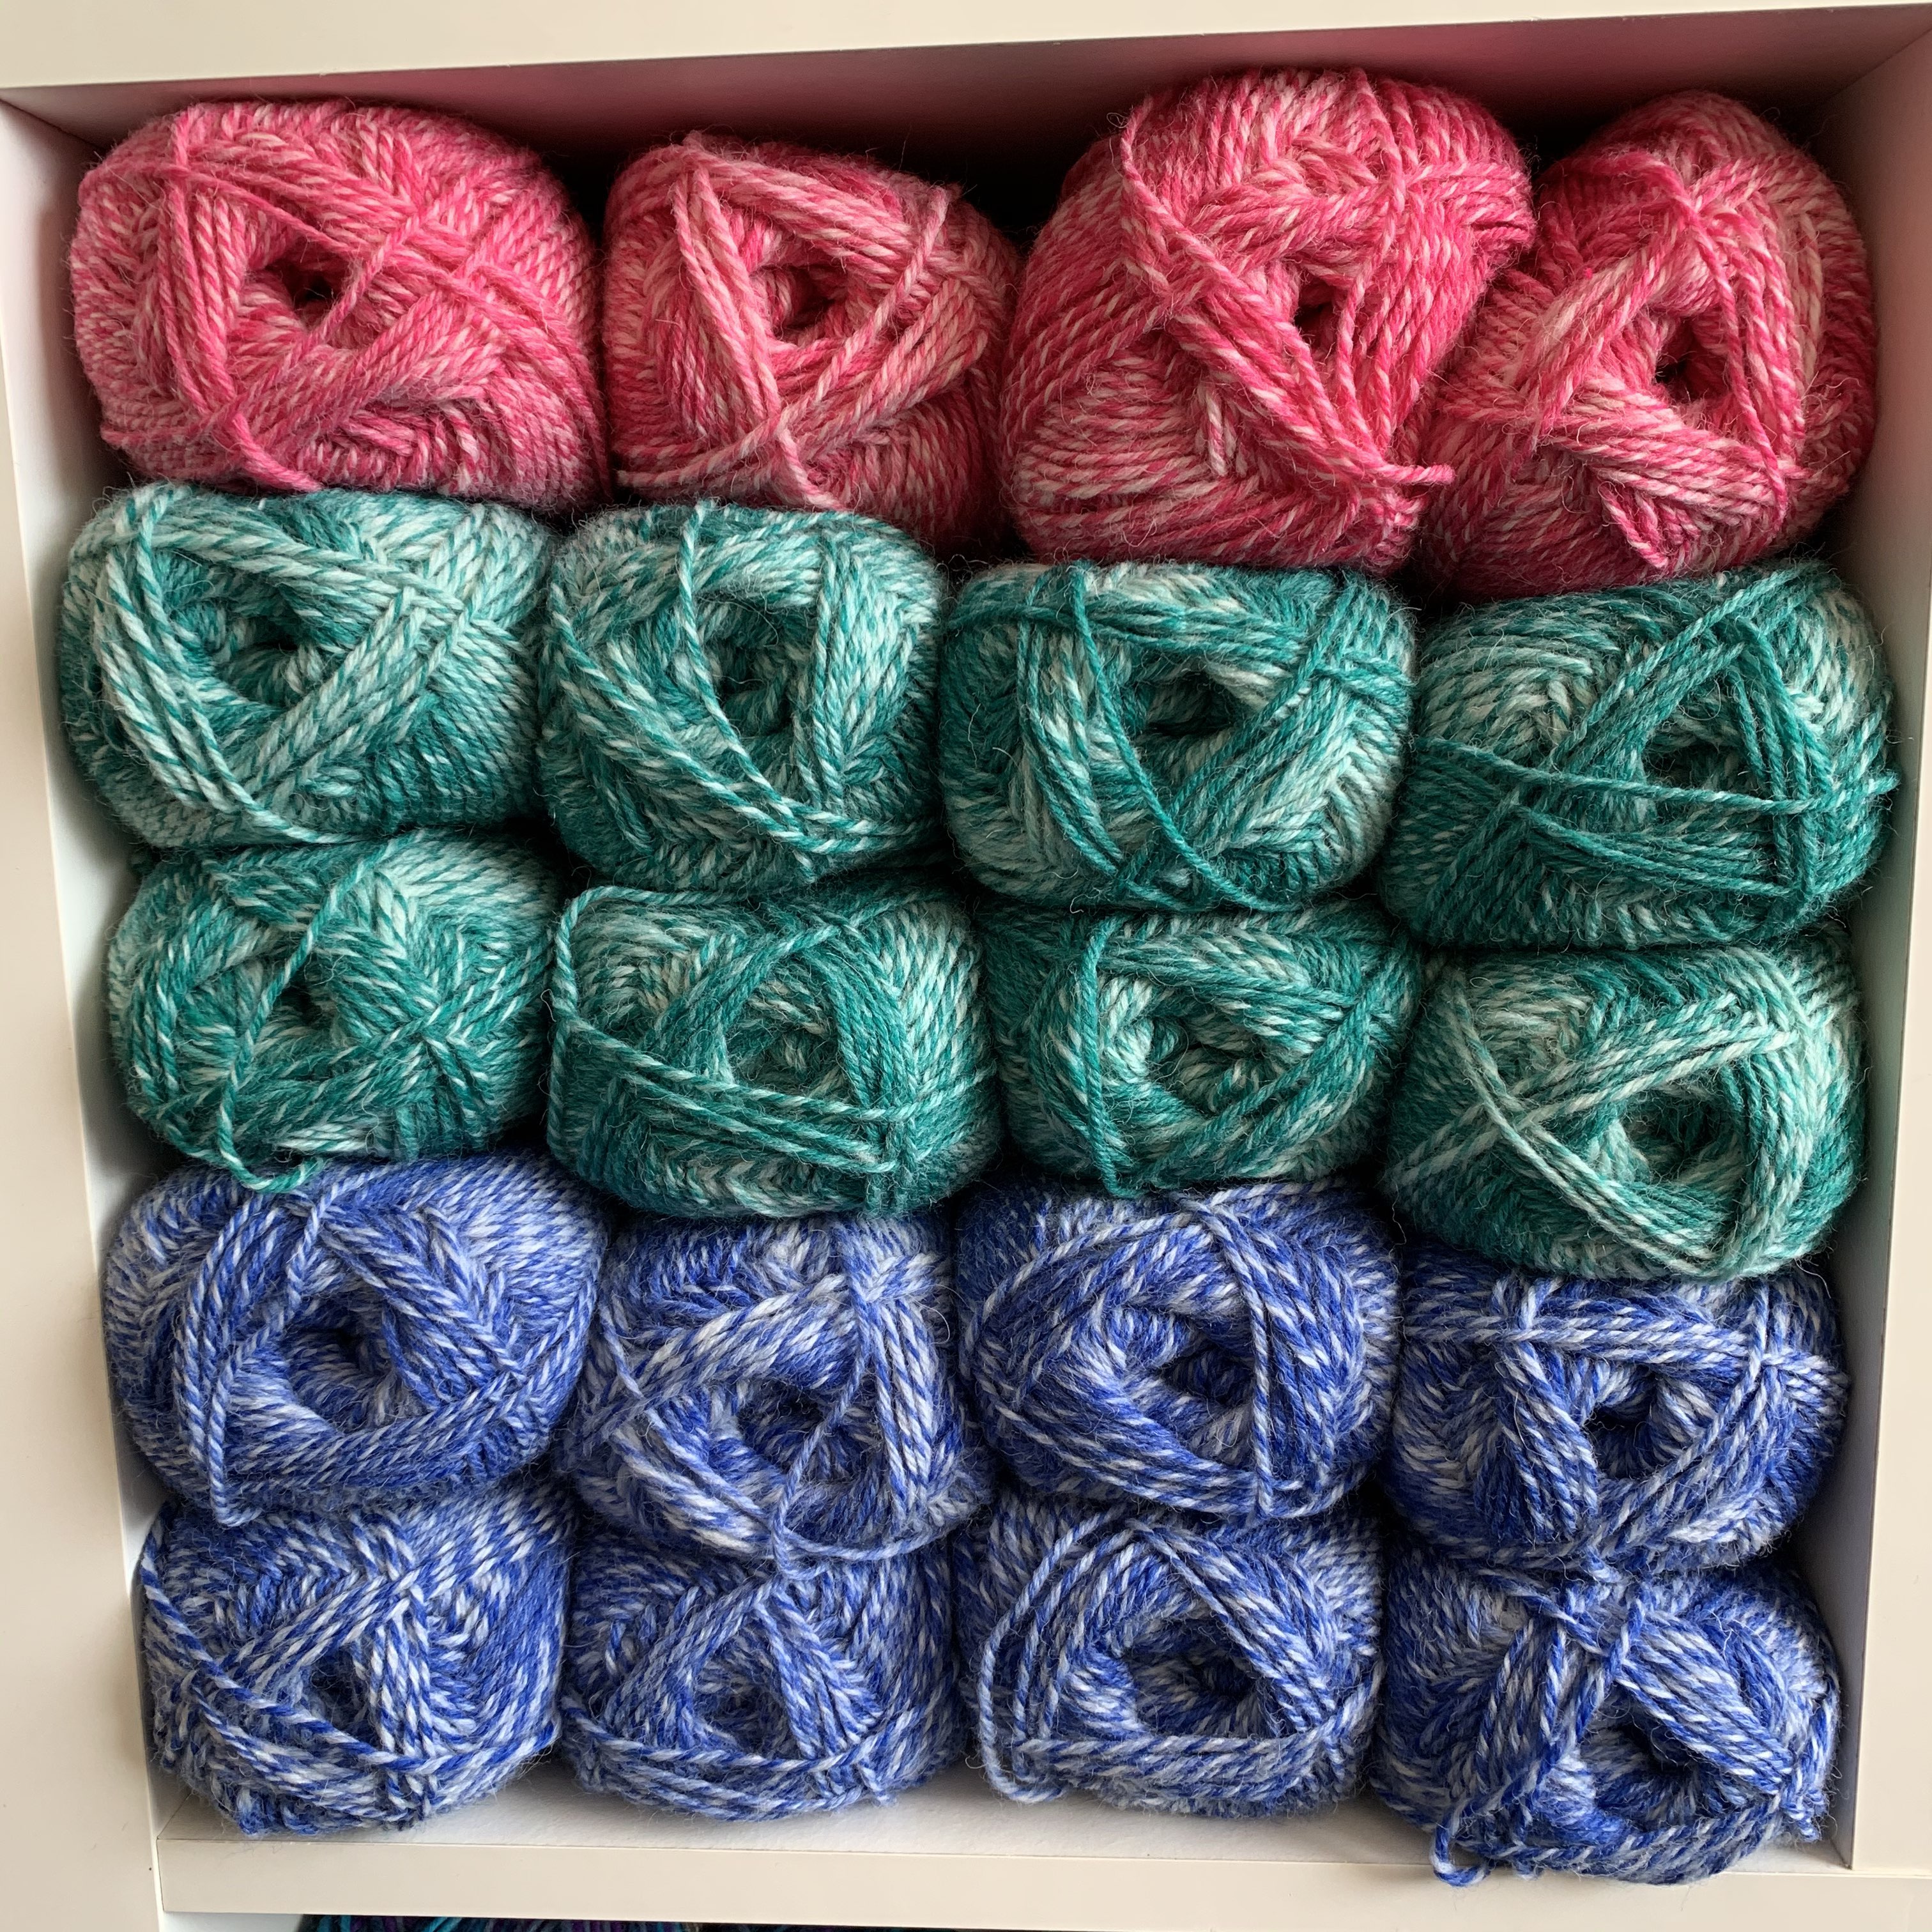 multi-coloured wool on a shelf